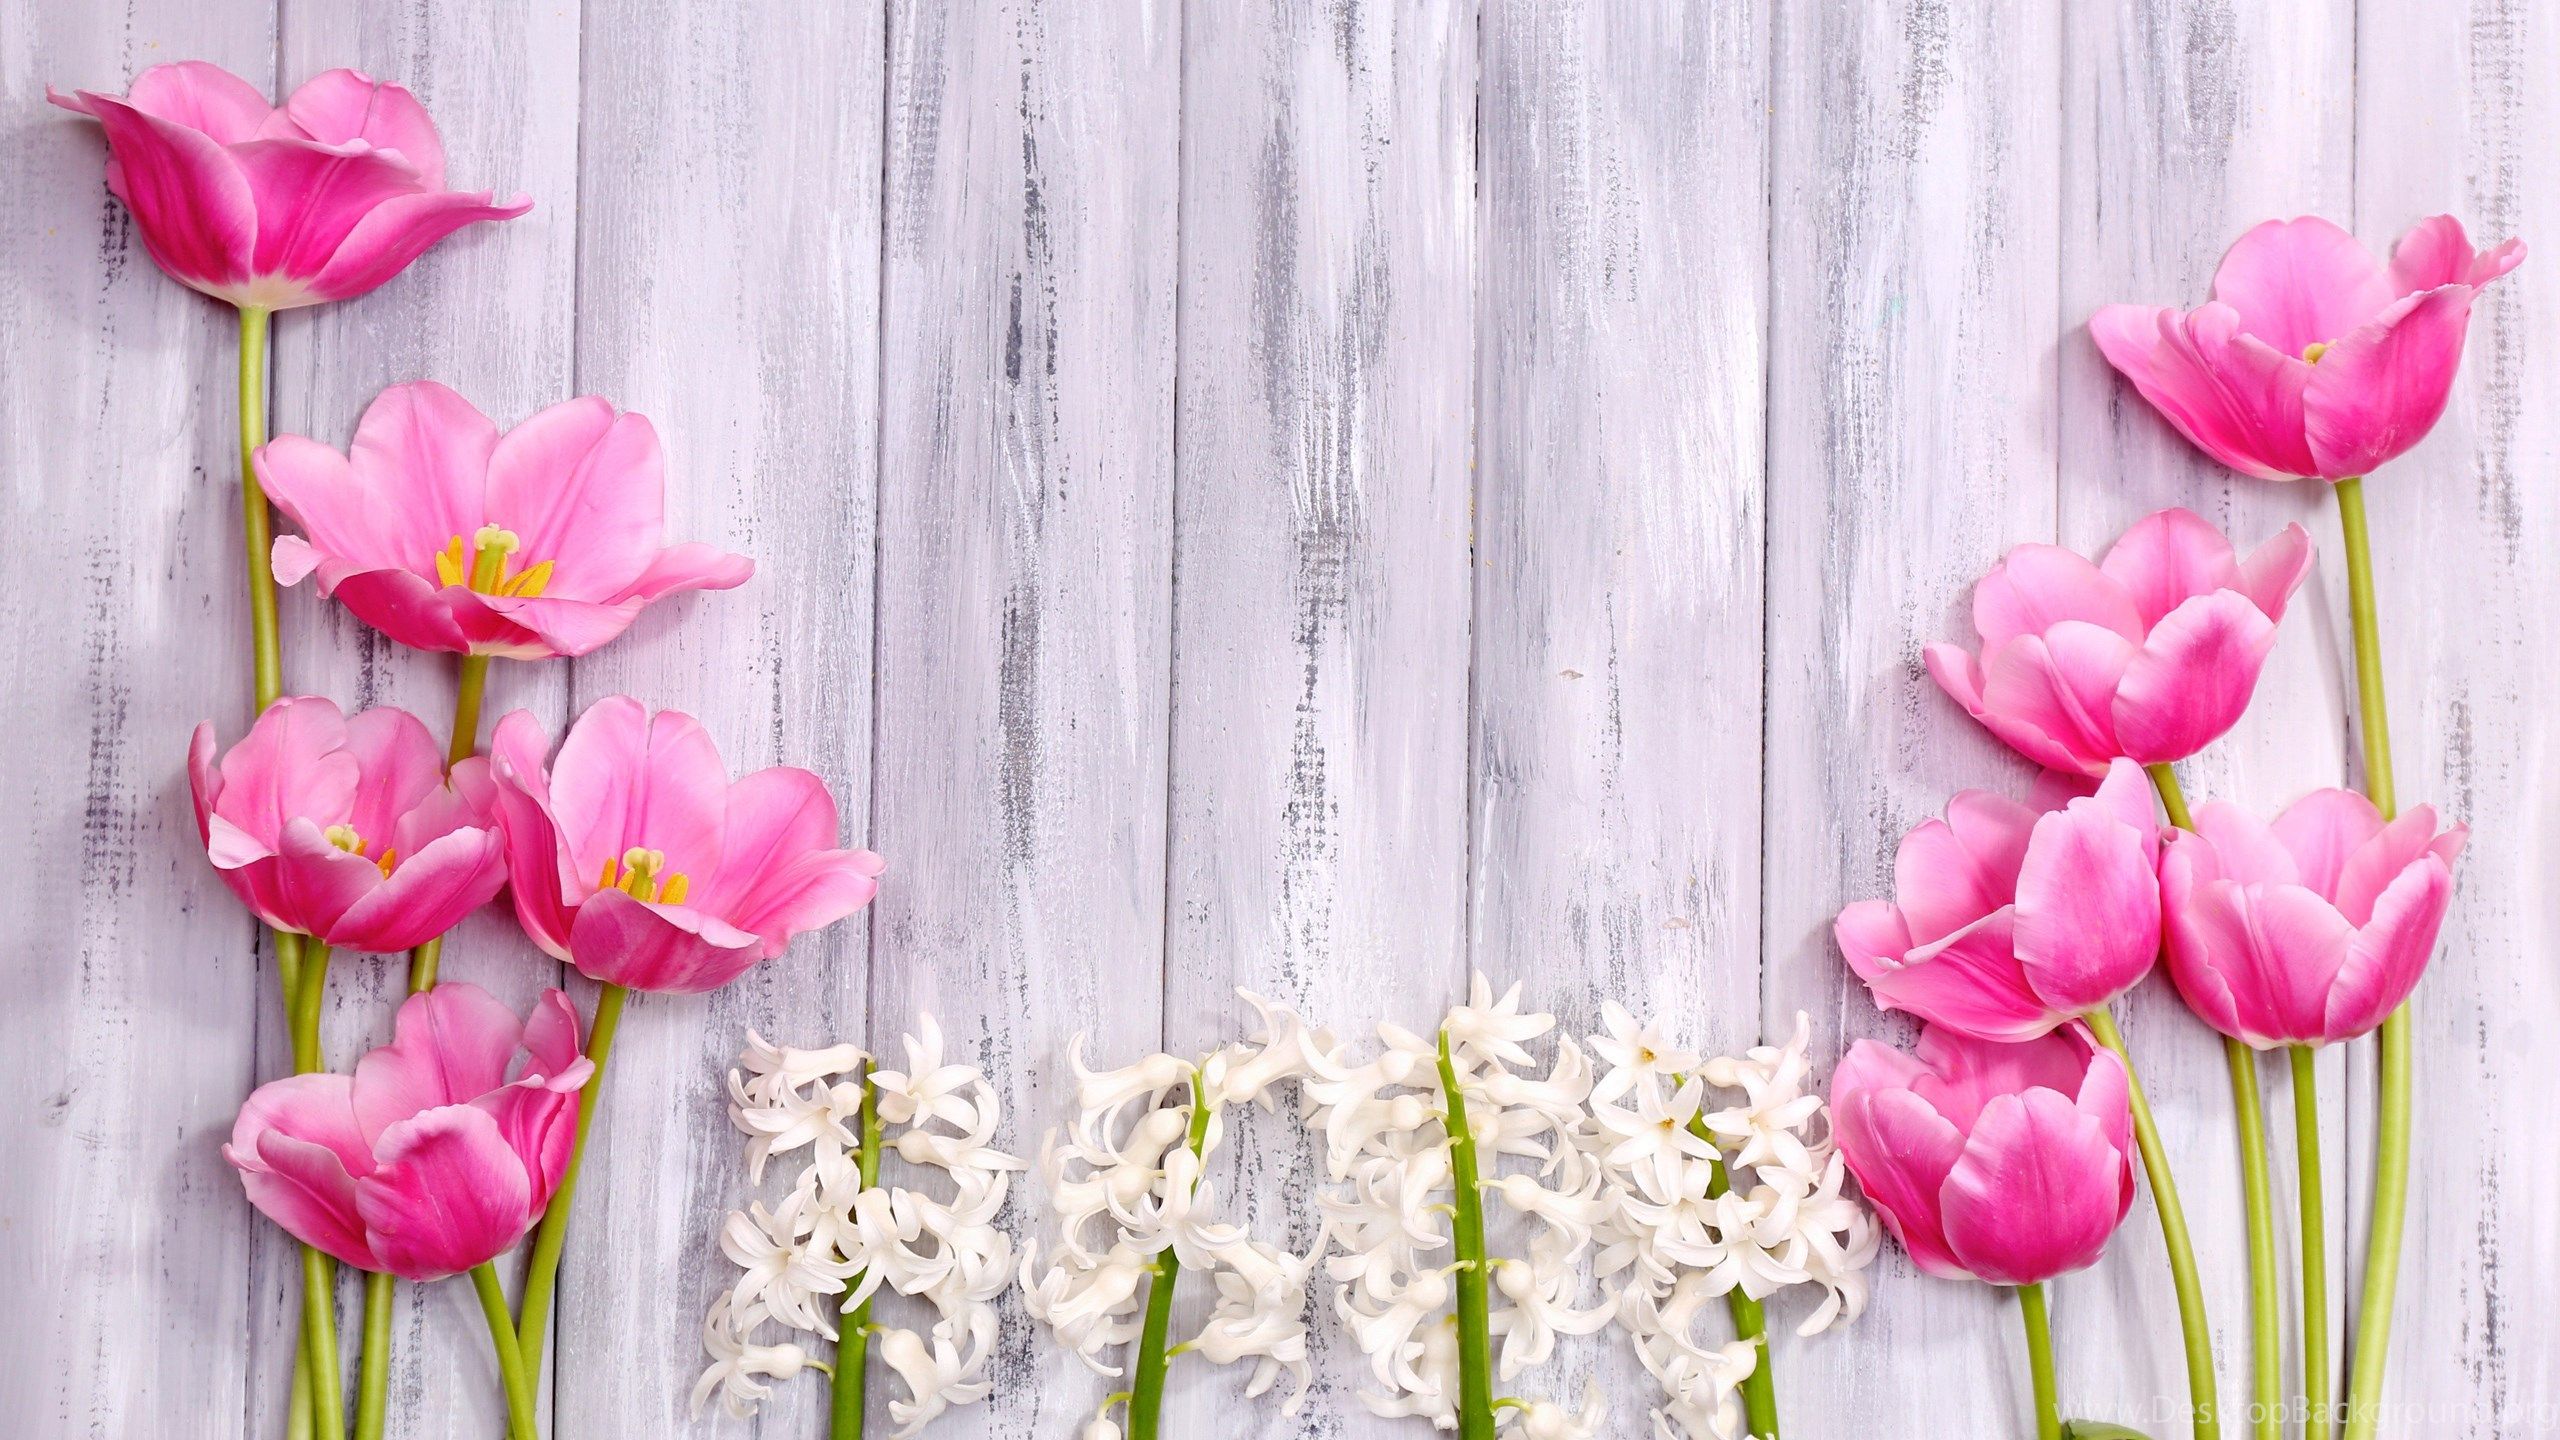 Flowers: Spring Flowers Hyacinth Wood Tulips Shutterstock Free